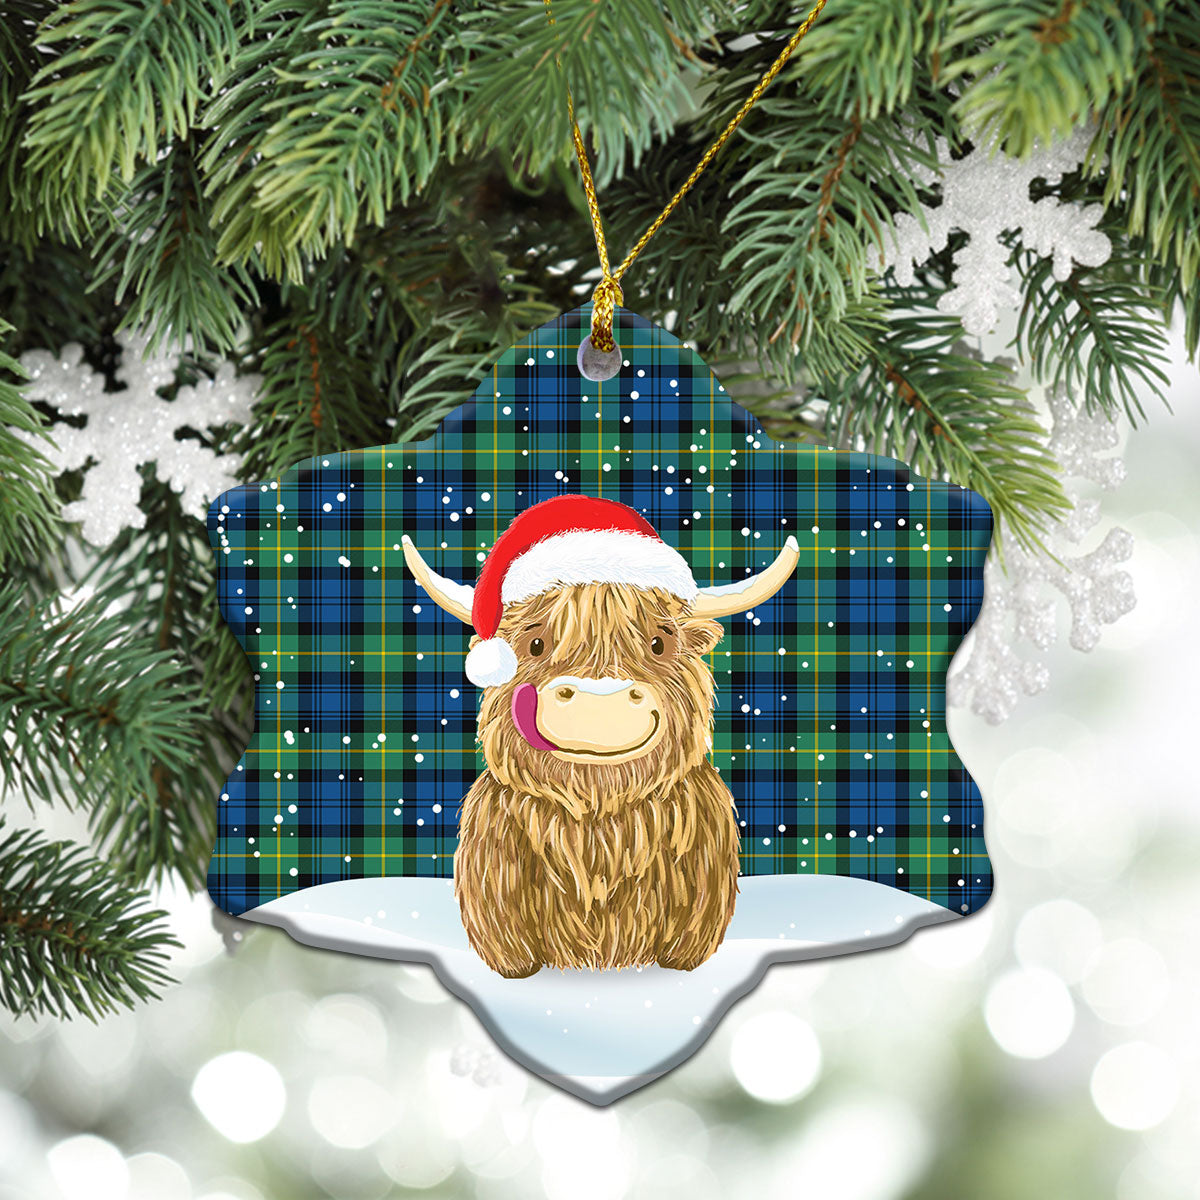 Gordon Ancient Tartan Christmas Ceramic Ornament - Highland Cows Style